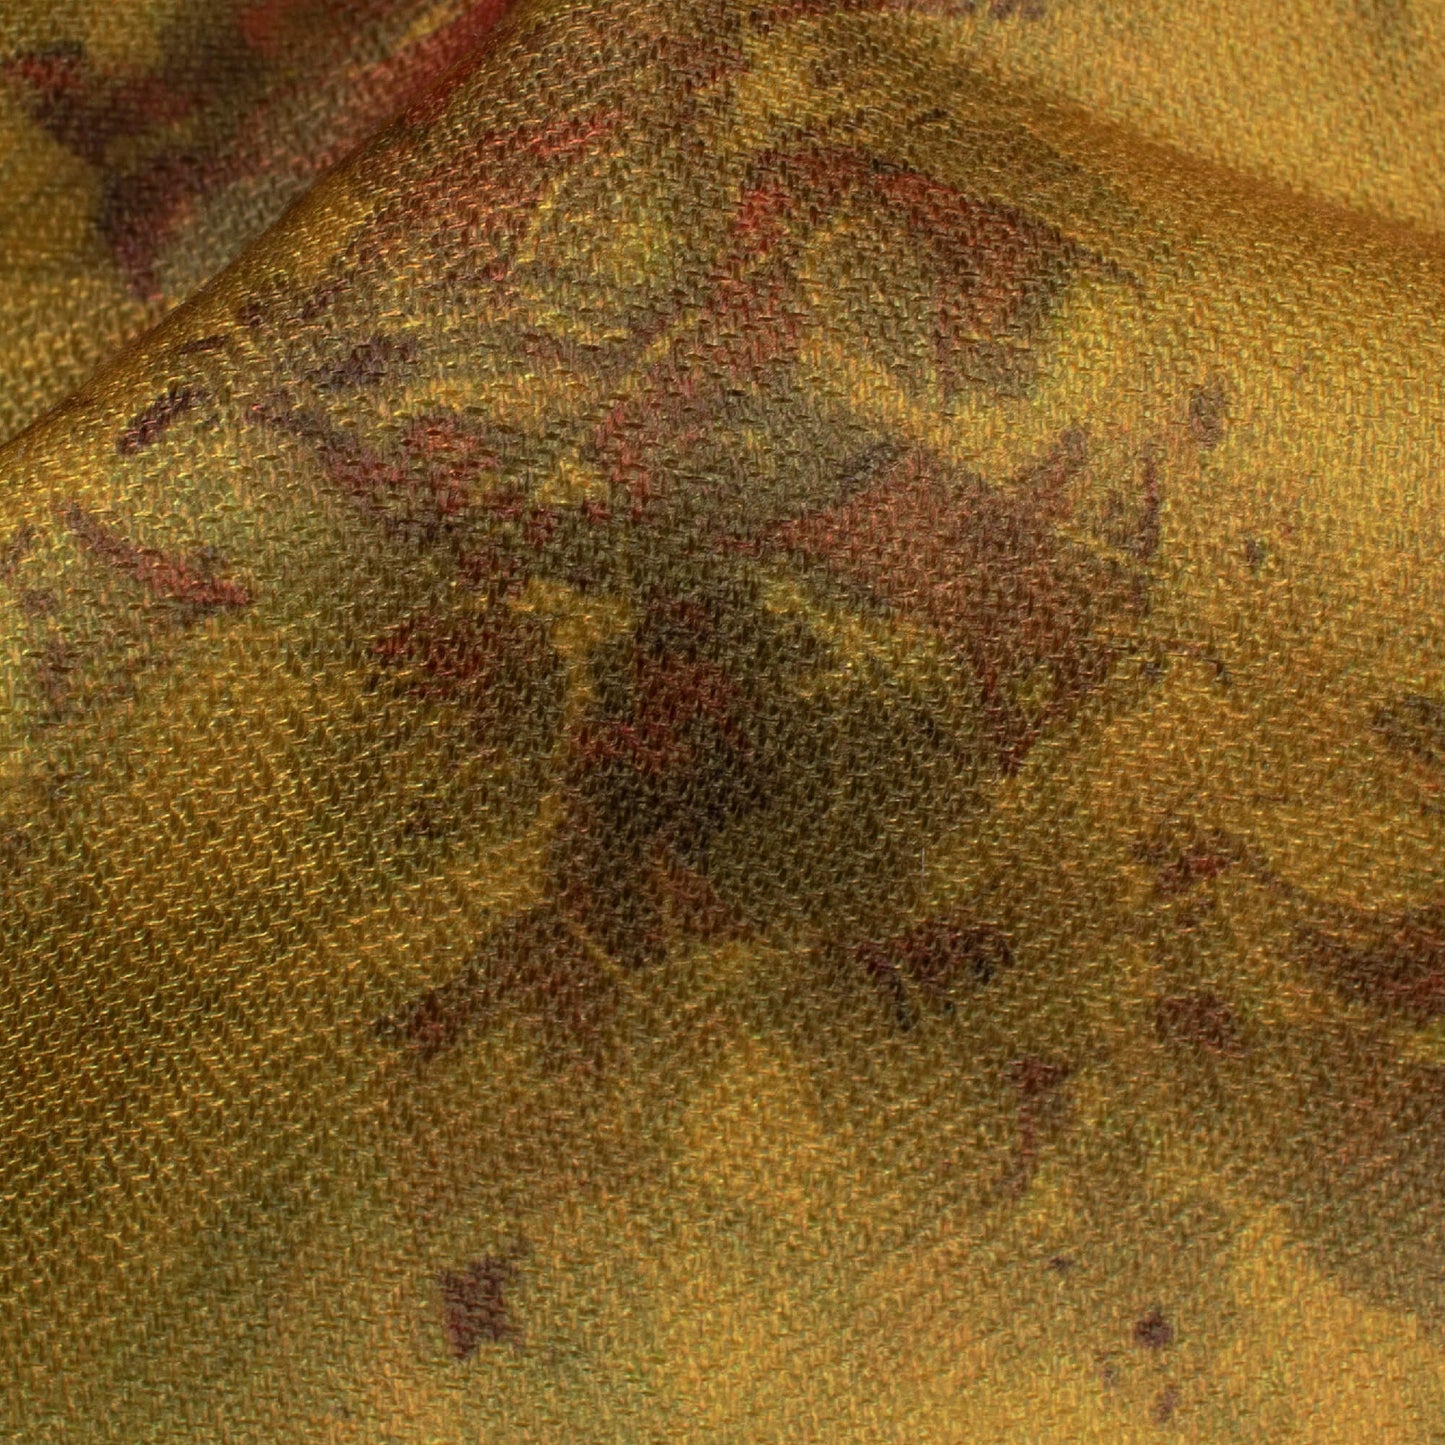 Dijon Yellow And Barn Red Abstract Pattern Digital Print Moss Crepe Fabric